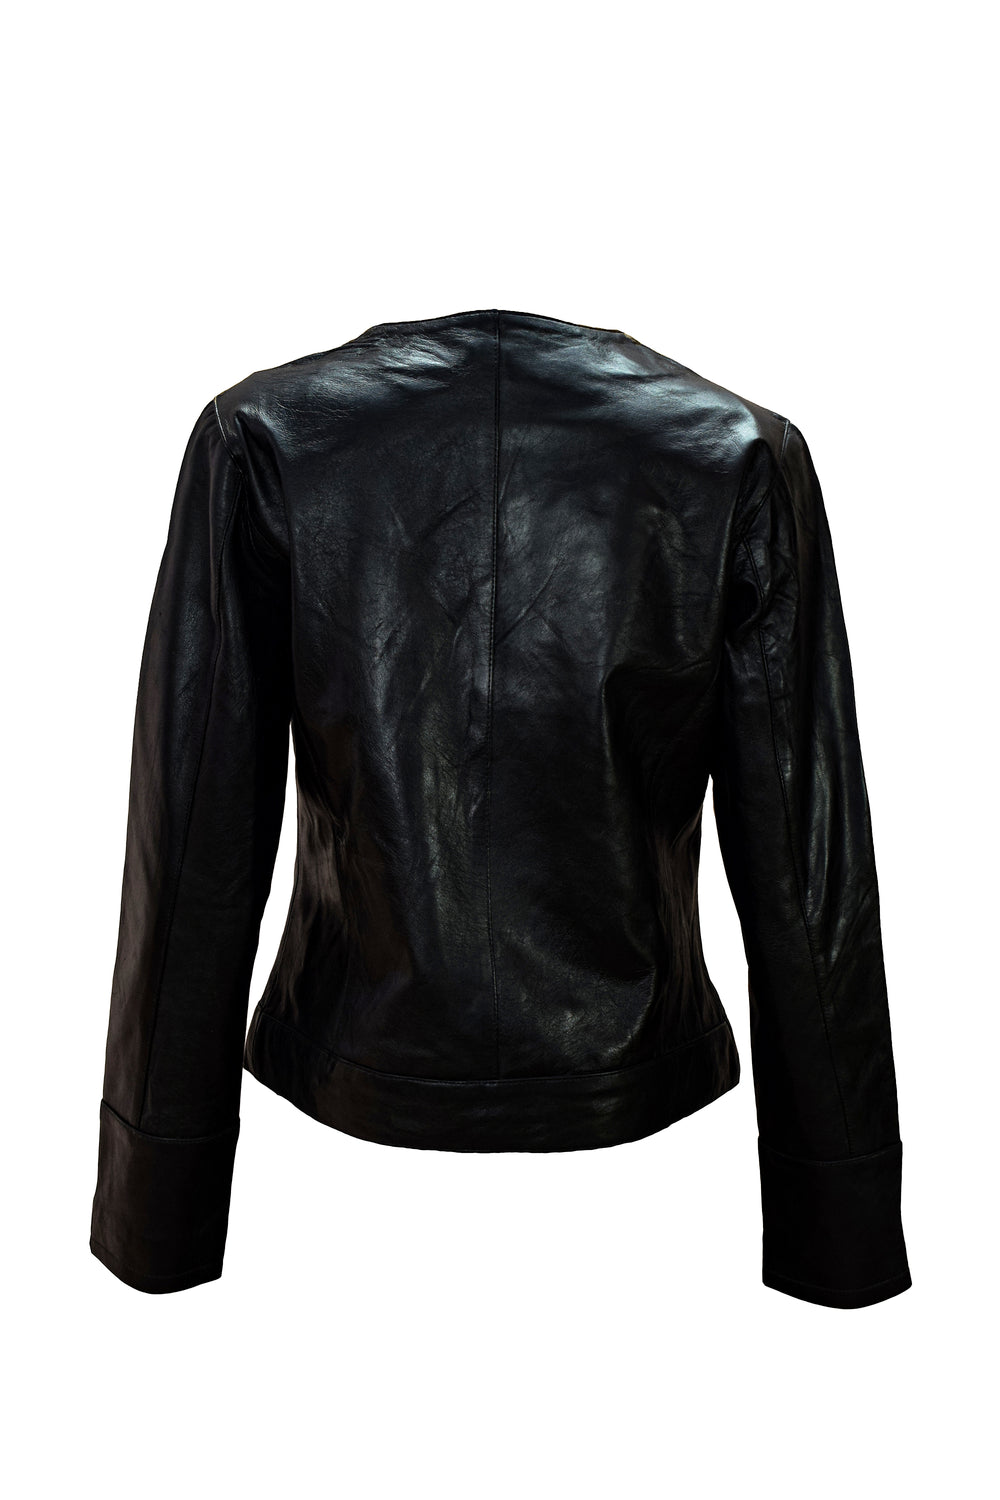 Women's Leather Blazer Collection | Leatherwear